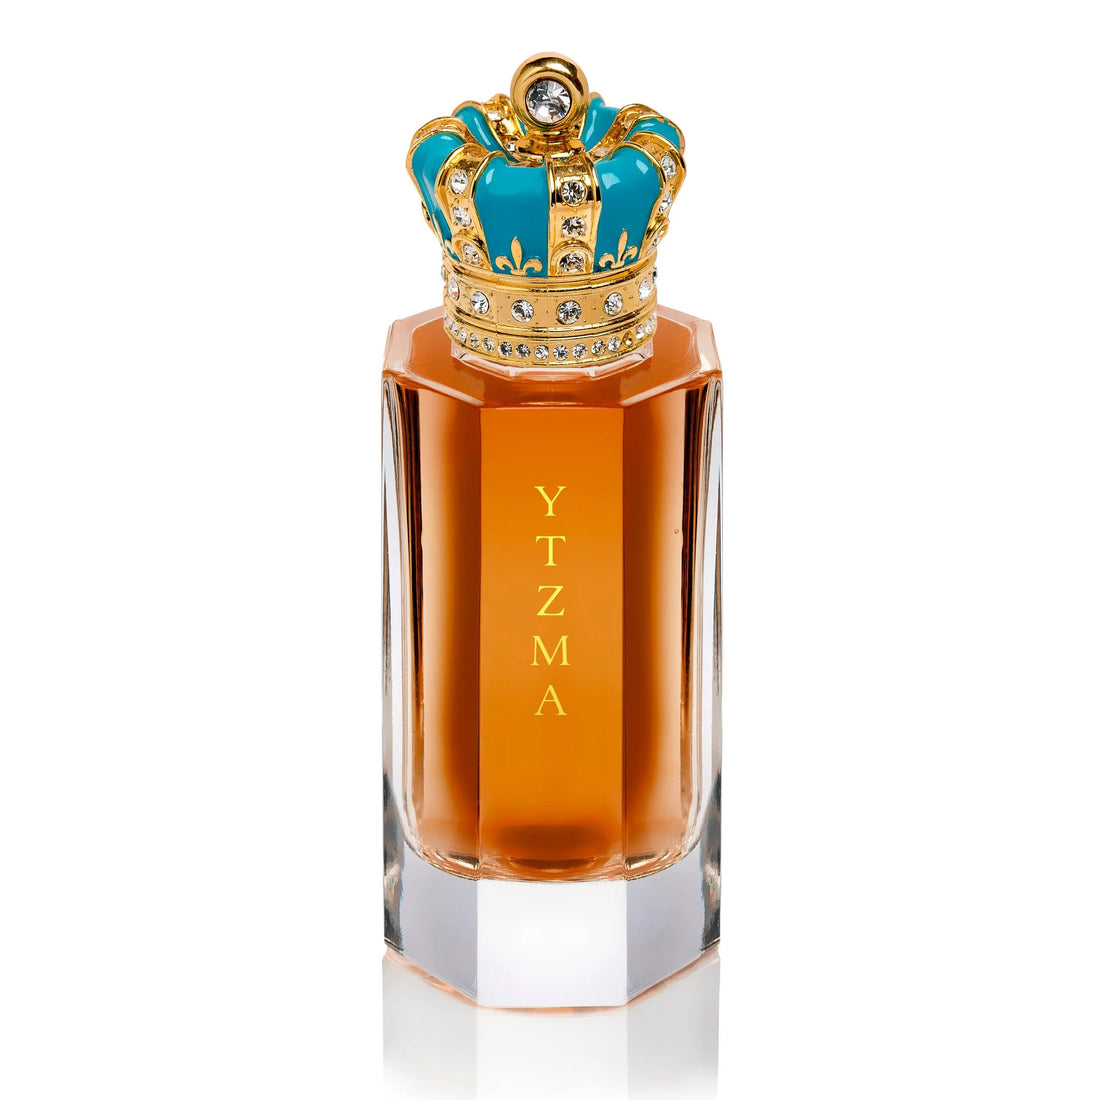 Ytzma Royal Crown - 50ml